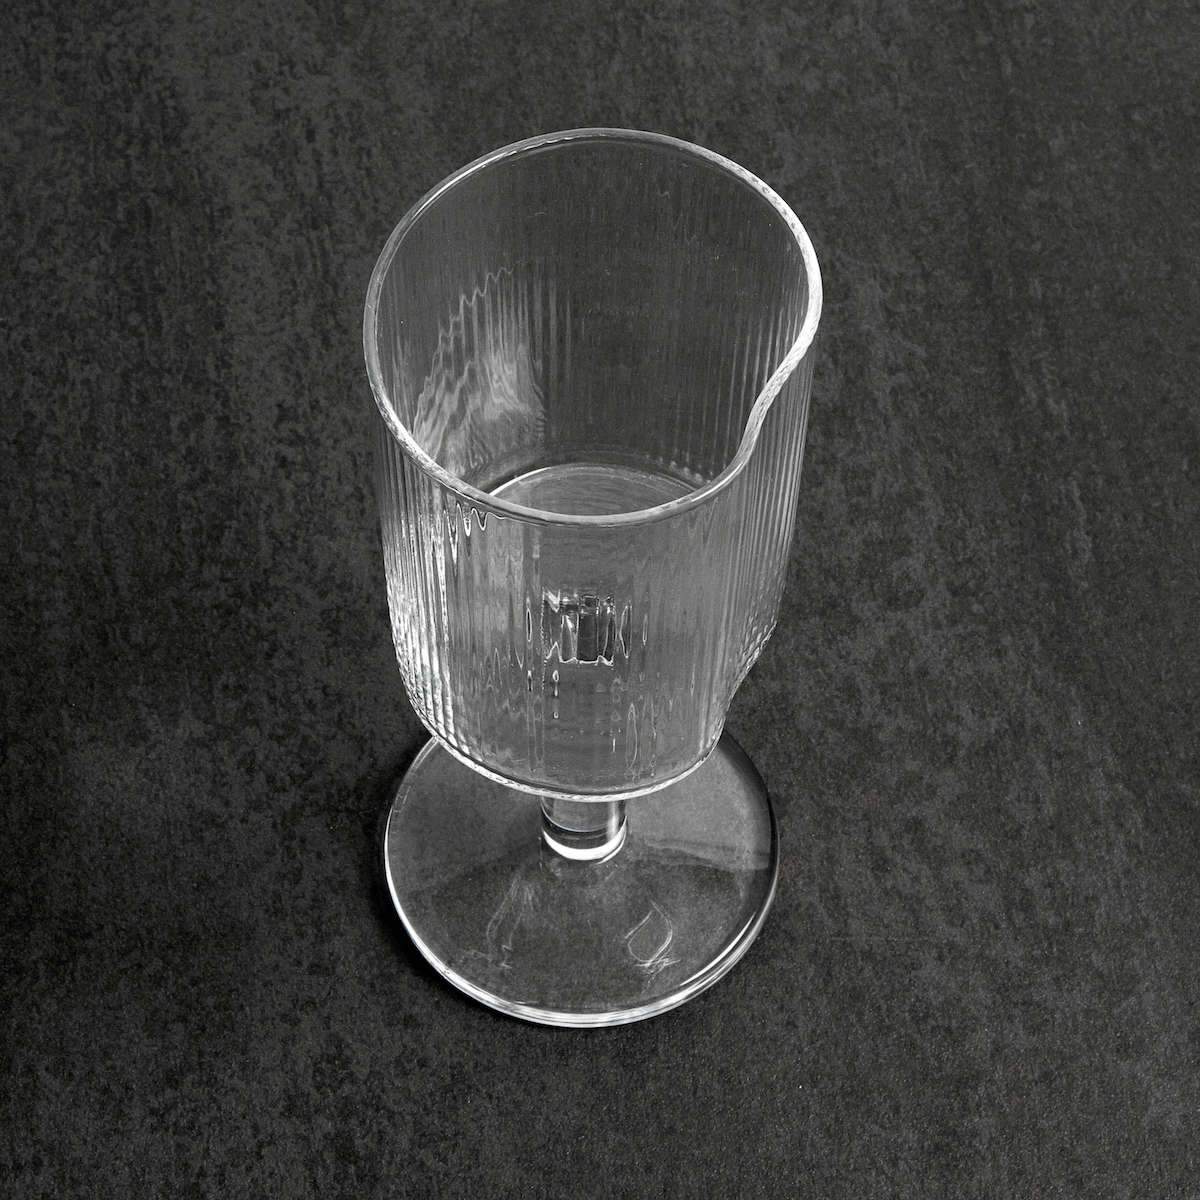 Muubs moden hvidvinsglas klar, 15 cm